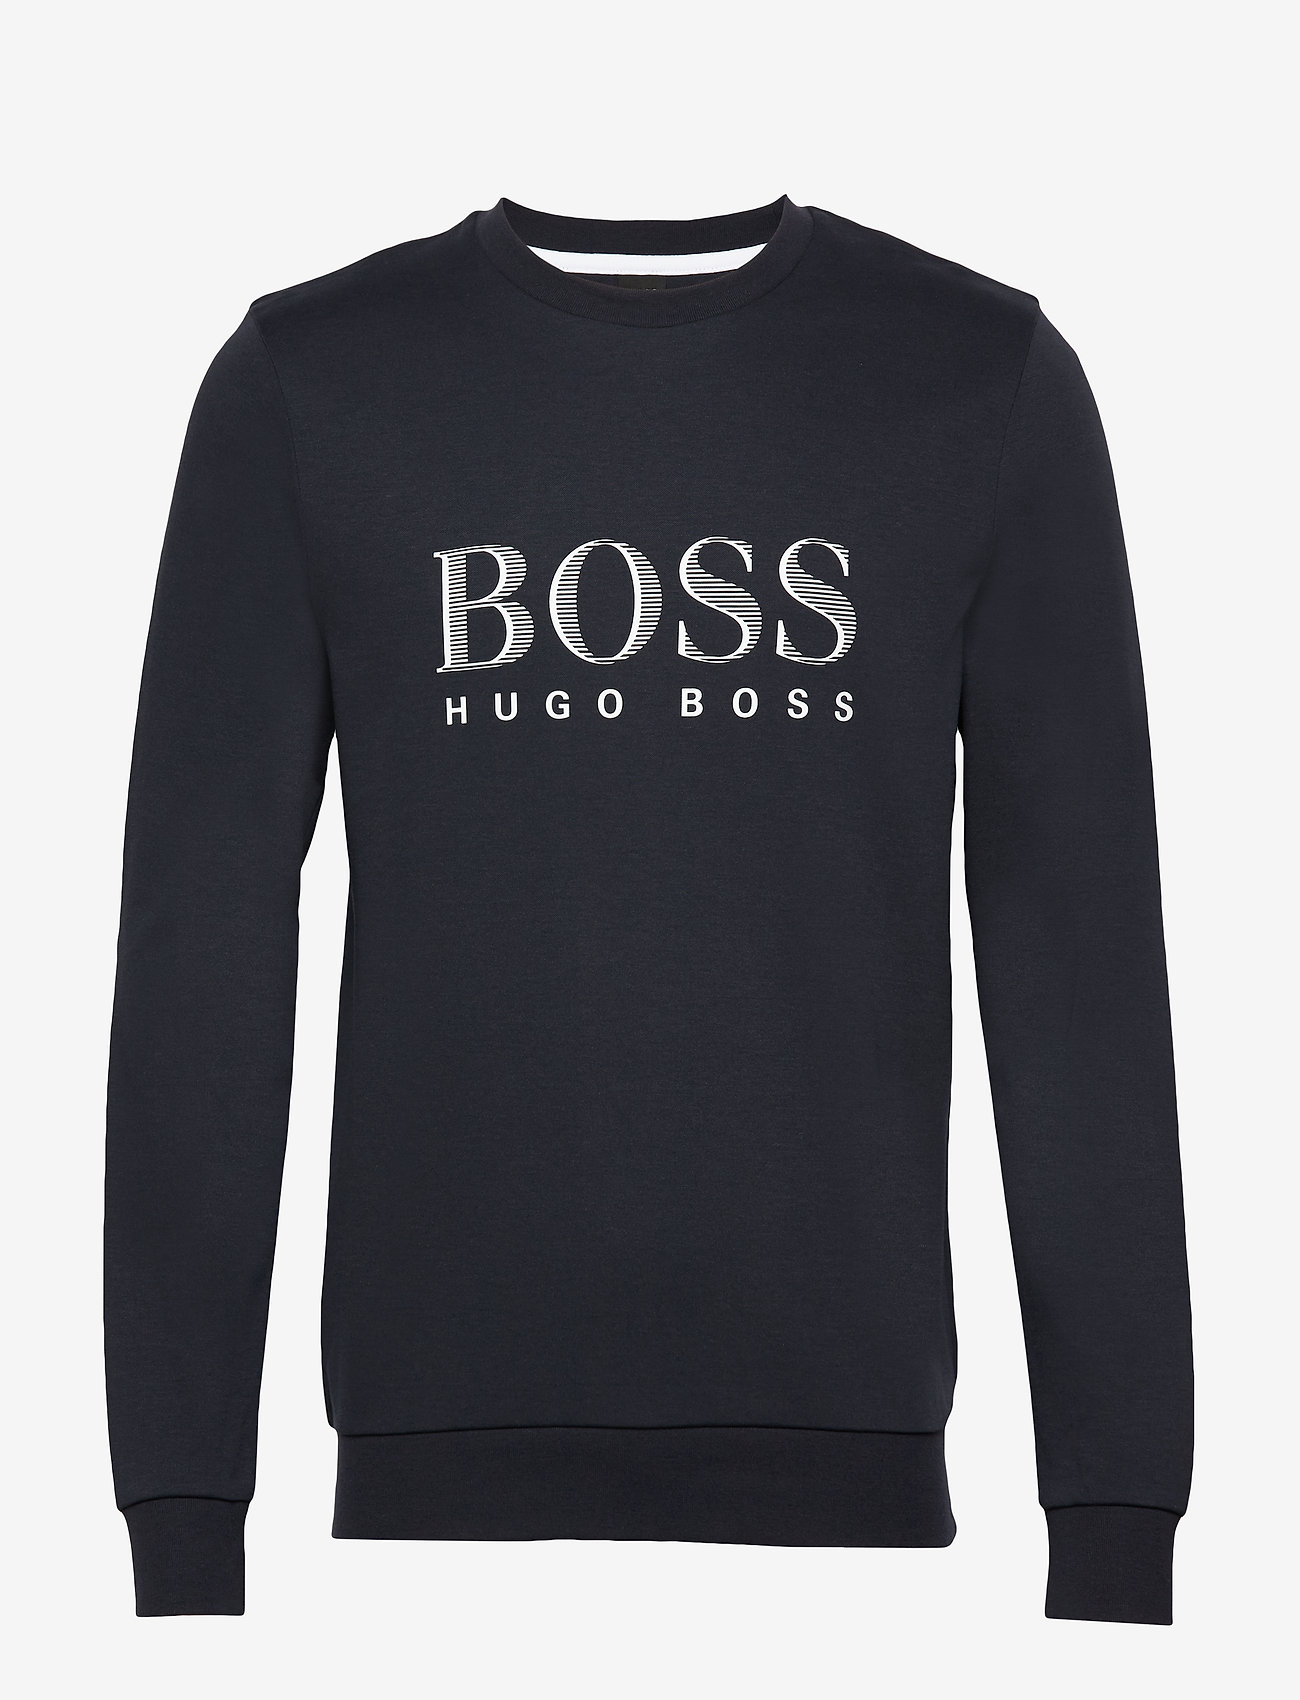 hugo boss hoodie boozt Shop Clothing 